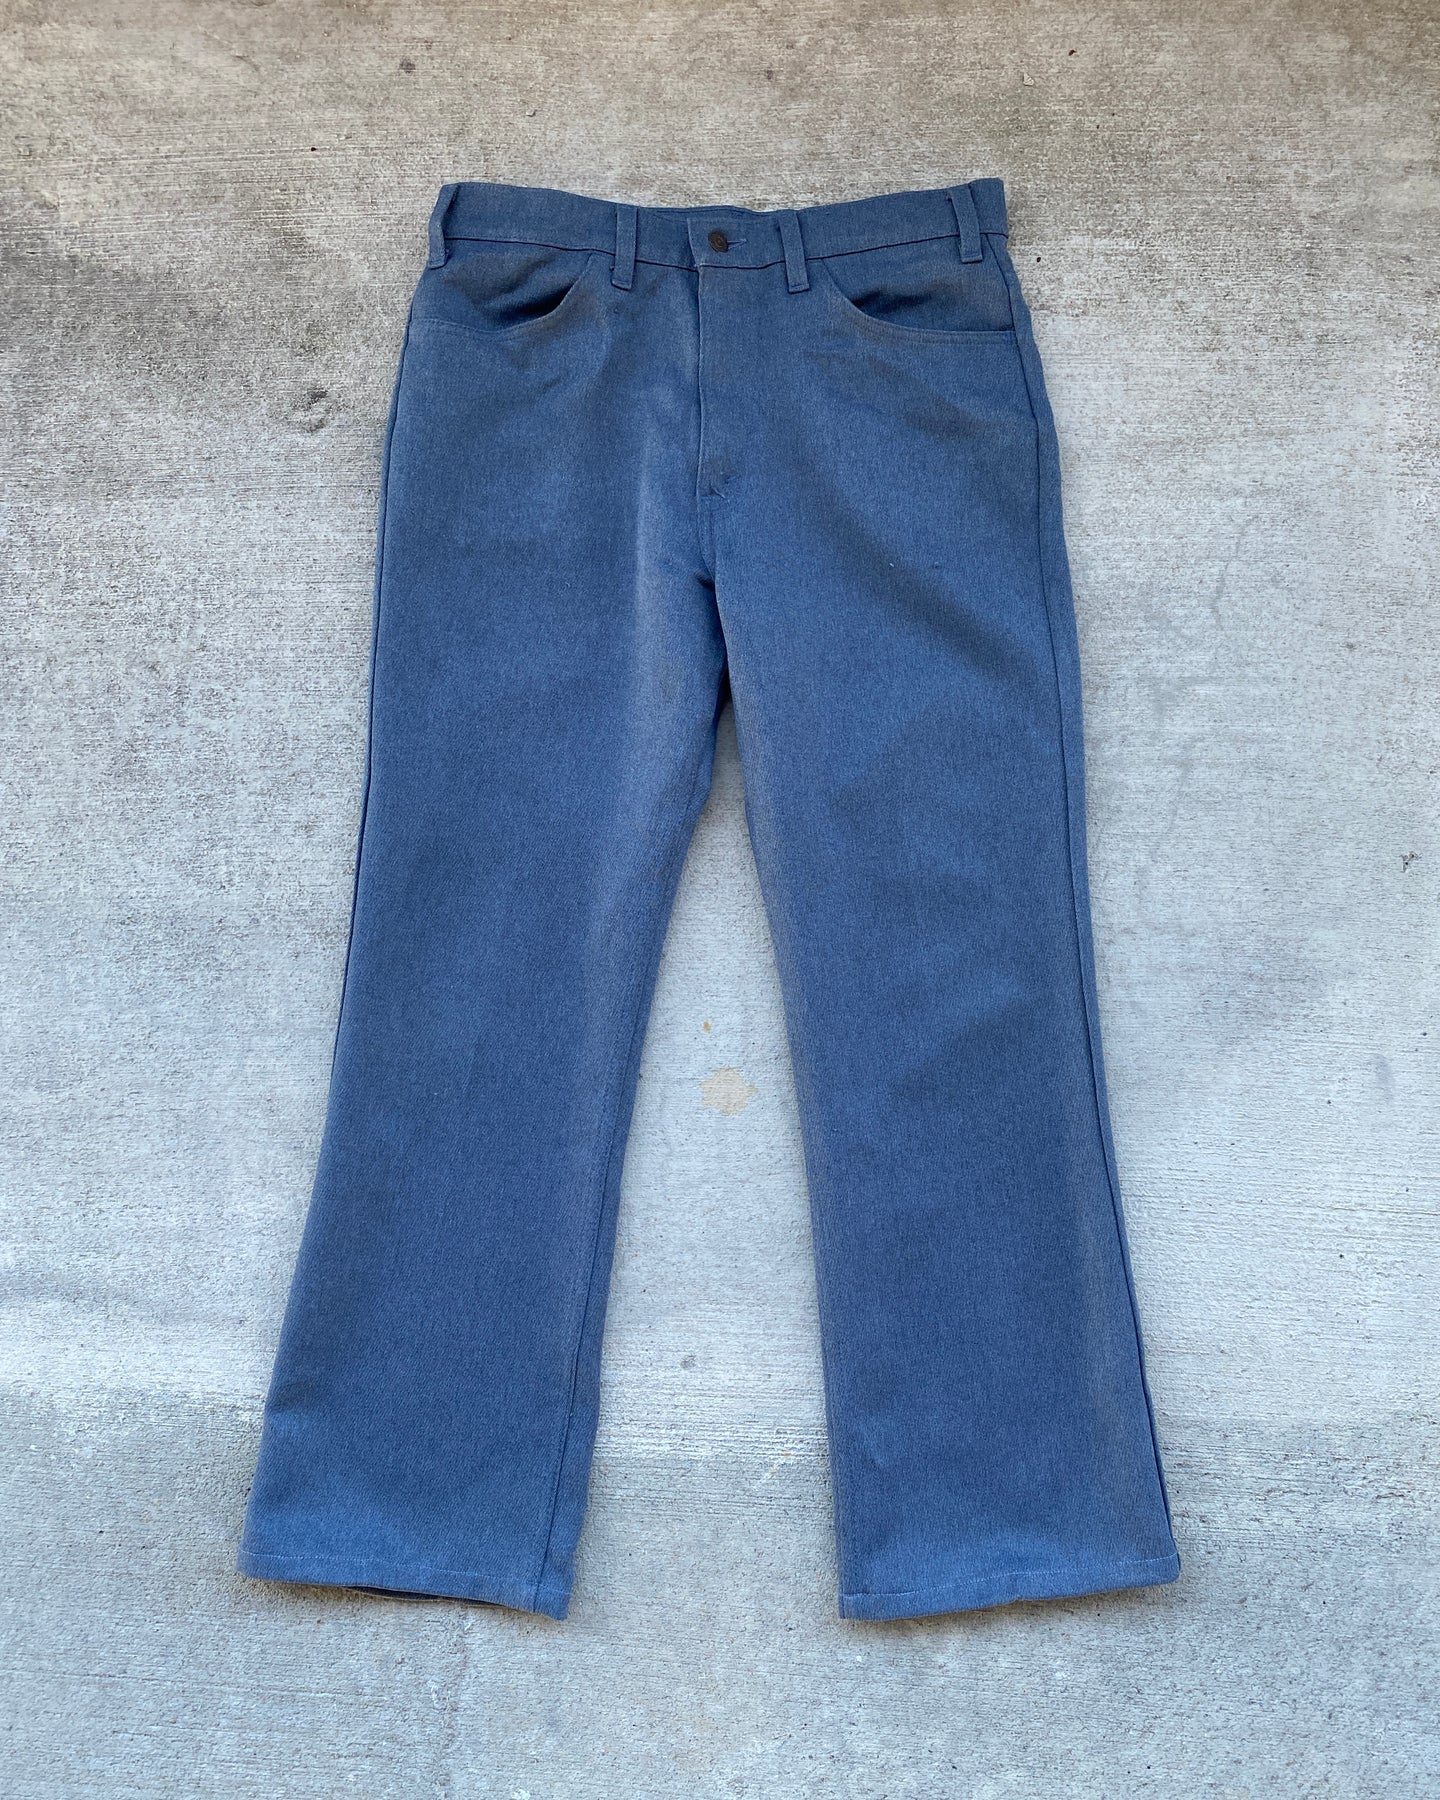 1970s Levi's 517 Dress Jeans - 32 x 29